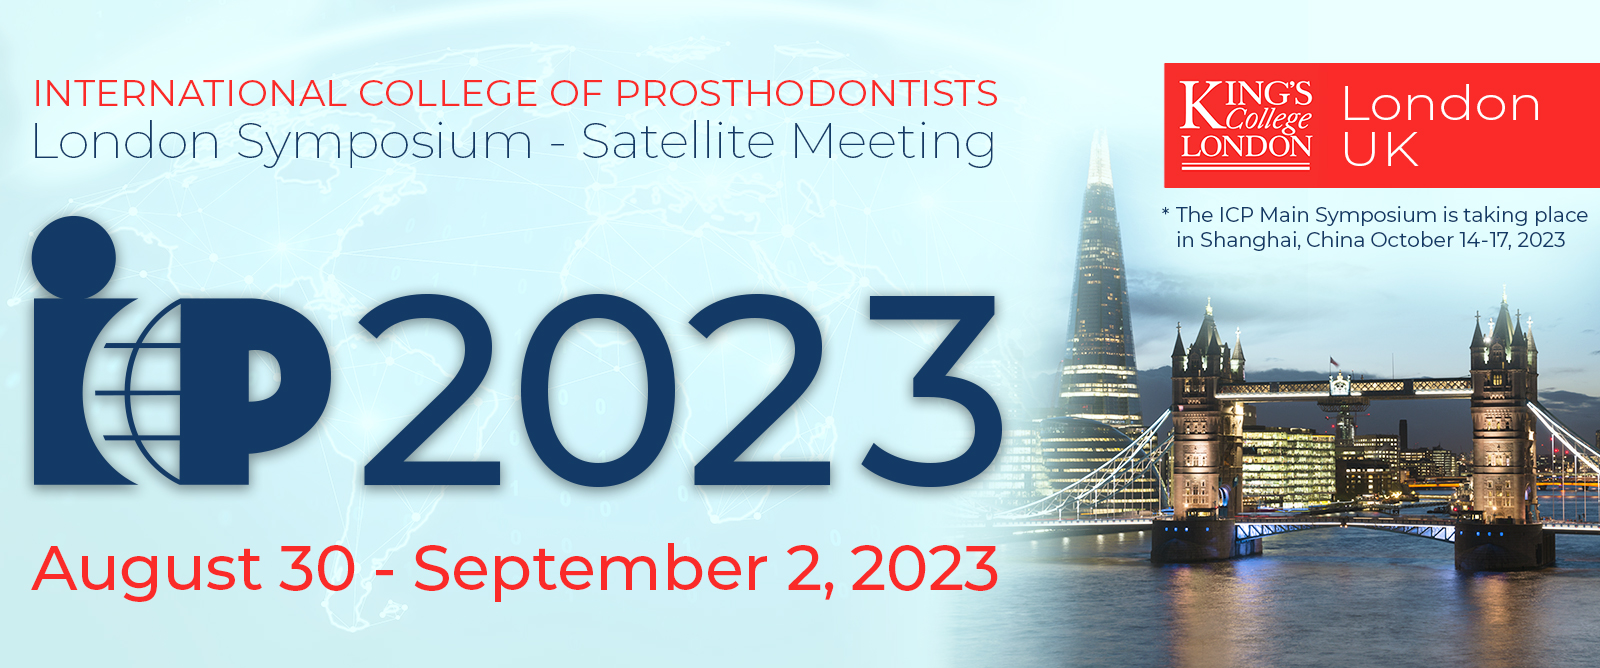 ICP 2023: London, UK Symposium - Satellite Meeting